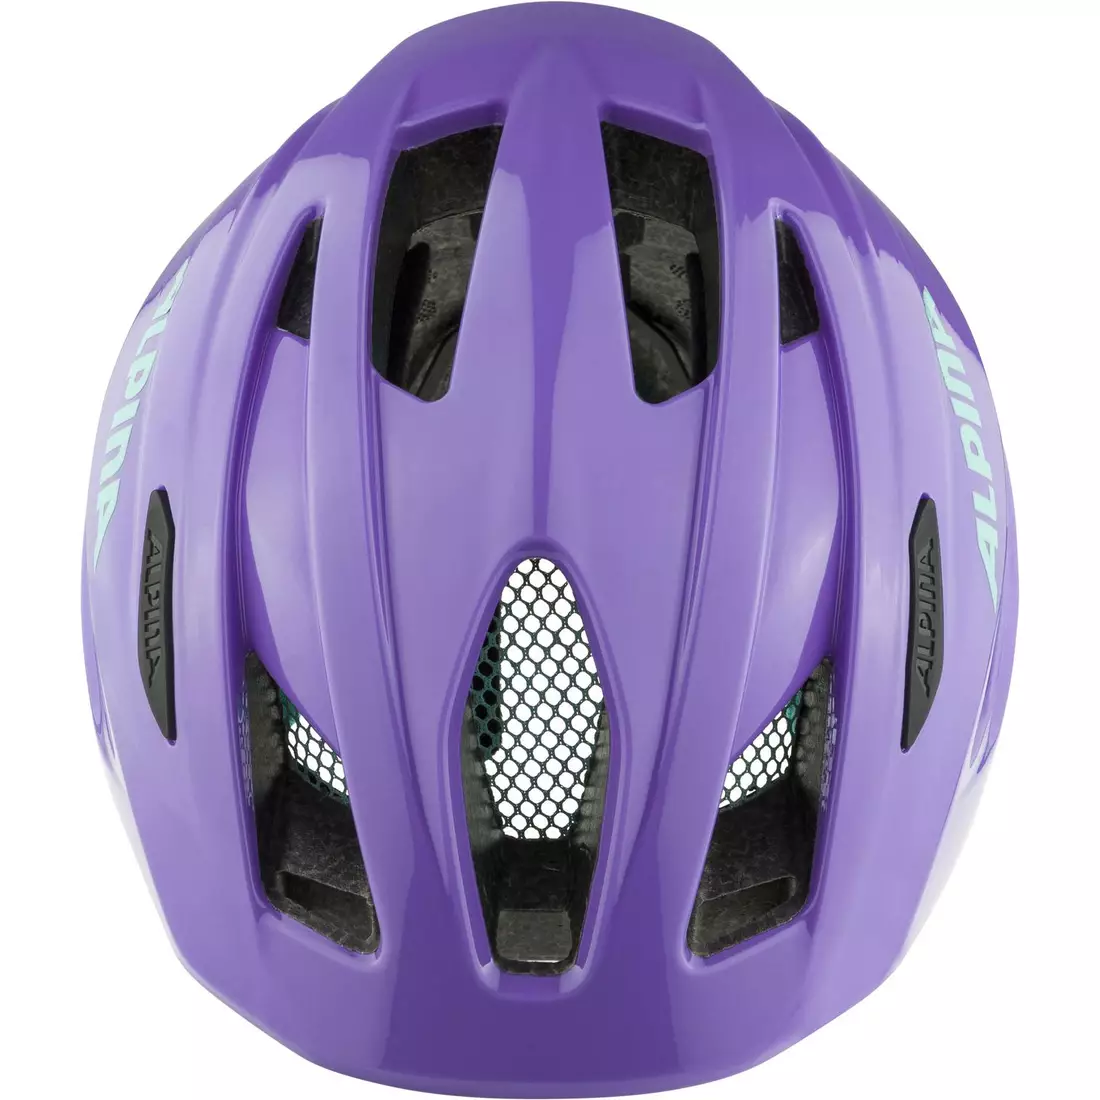 ALPINA PICO casca de bicicleta mtb copii, purple gloss